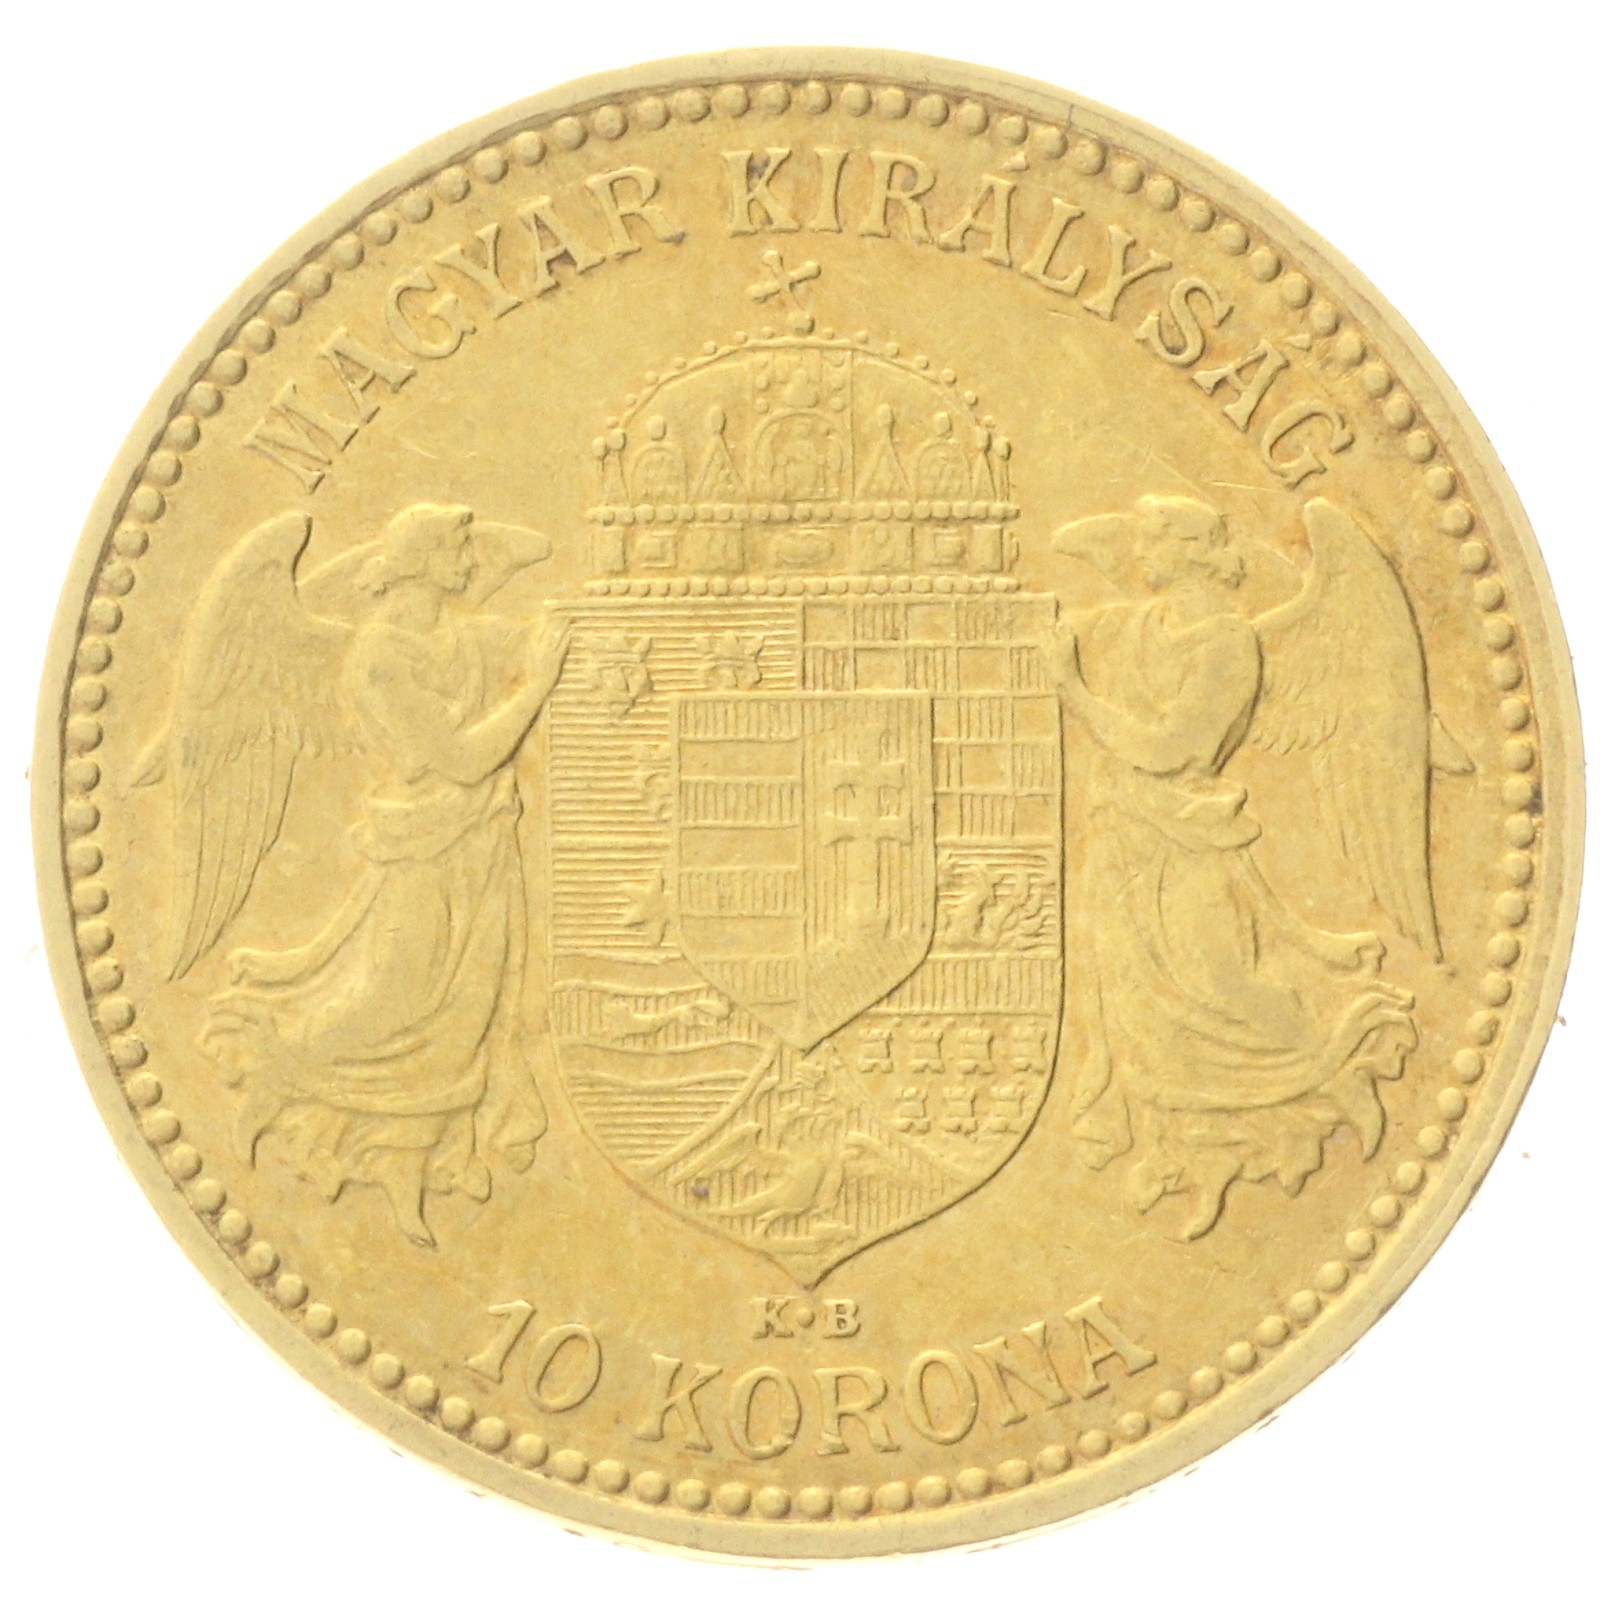 Hungary - 10 korona - 1901 - Franz Joseph I 